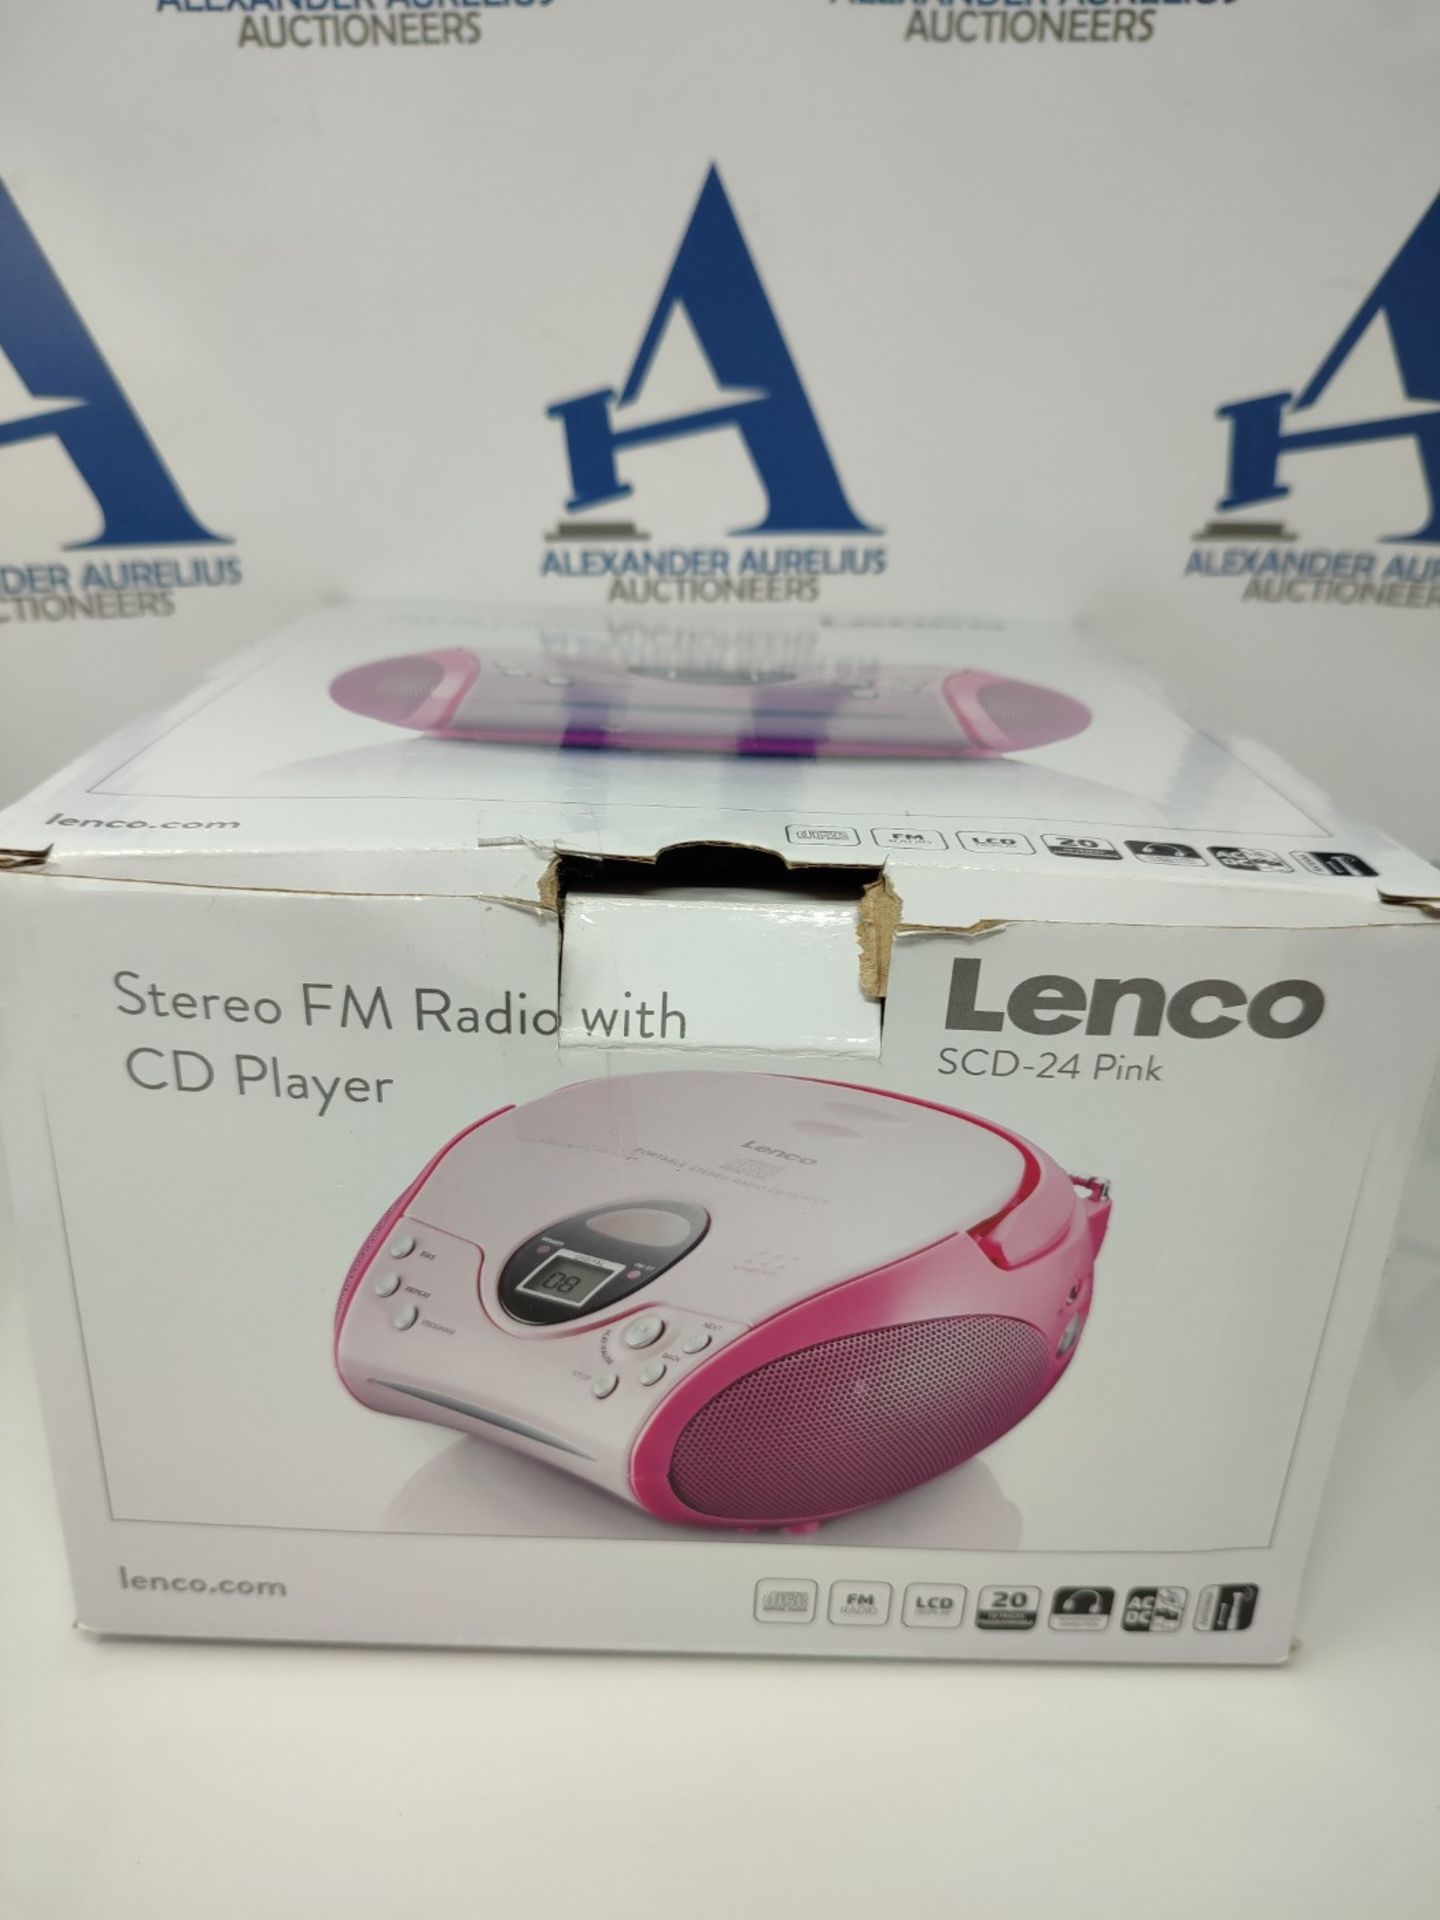 Lenco SCD-24 stereo FM radio with CD player and telescopic antenna pink - Bild 2 aus 3